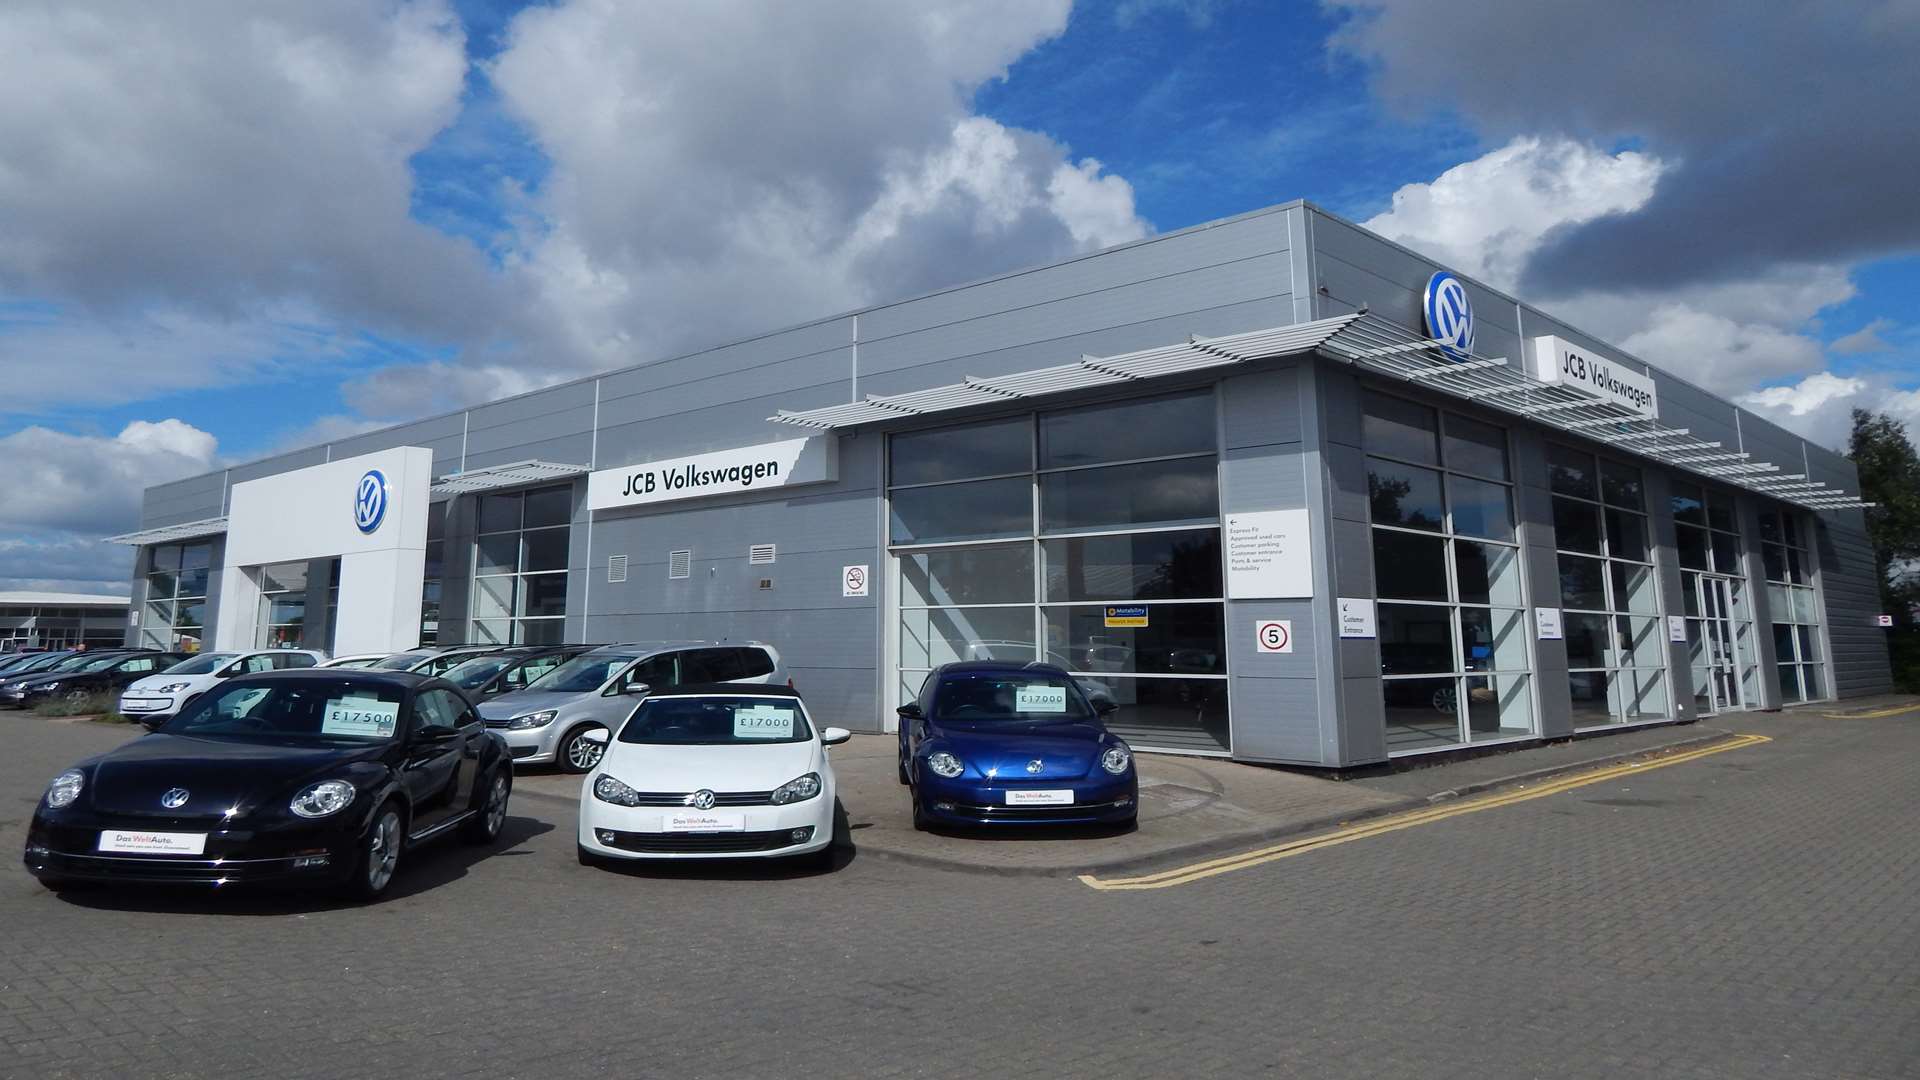 JCB Group's VW dealership in Ashford